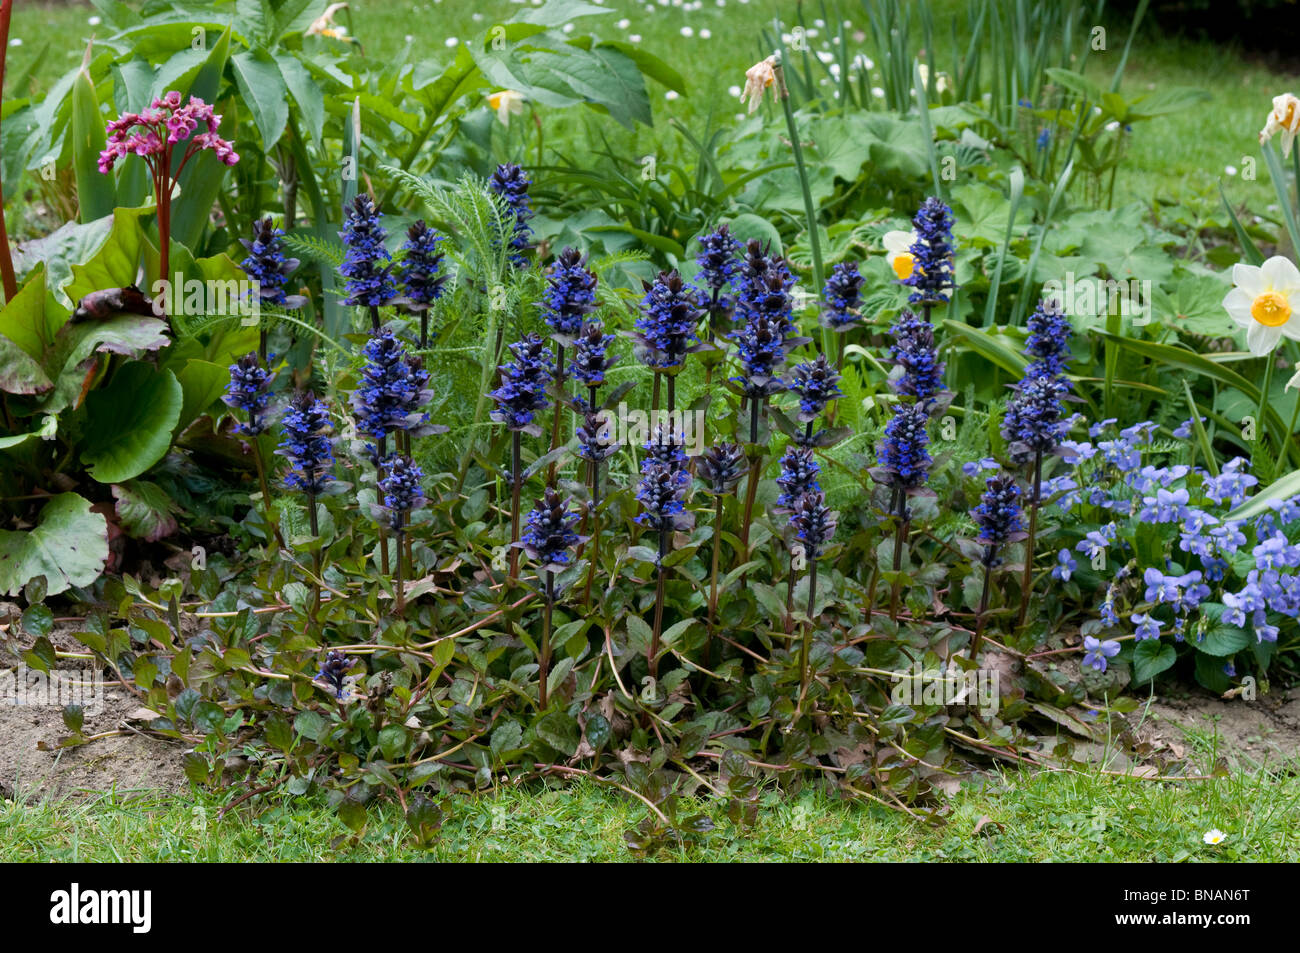 Clump of flowering Ajuga reptans 'Catlin's Giant' in garden setting Stock Photo